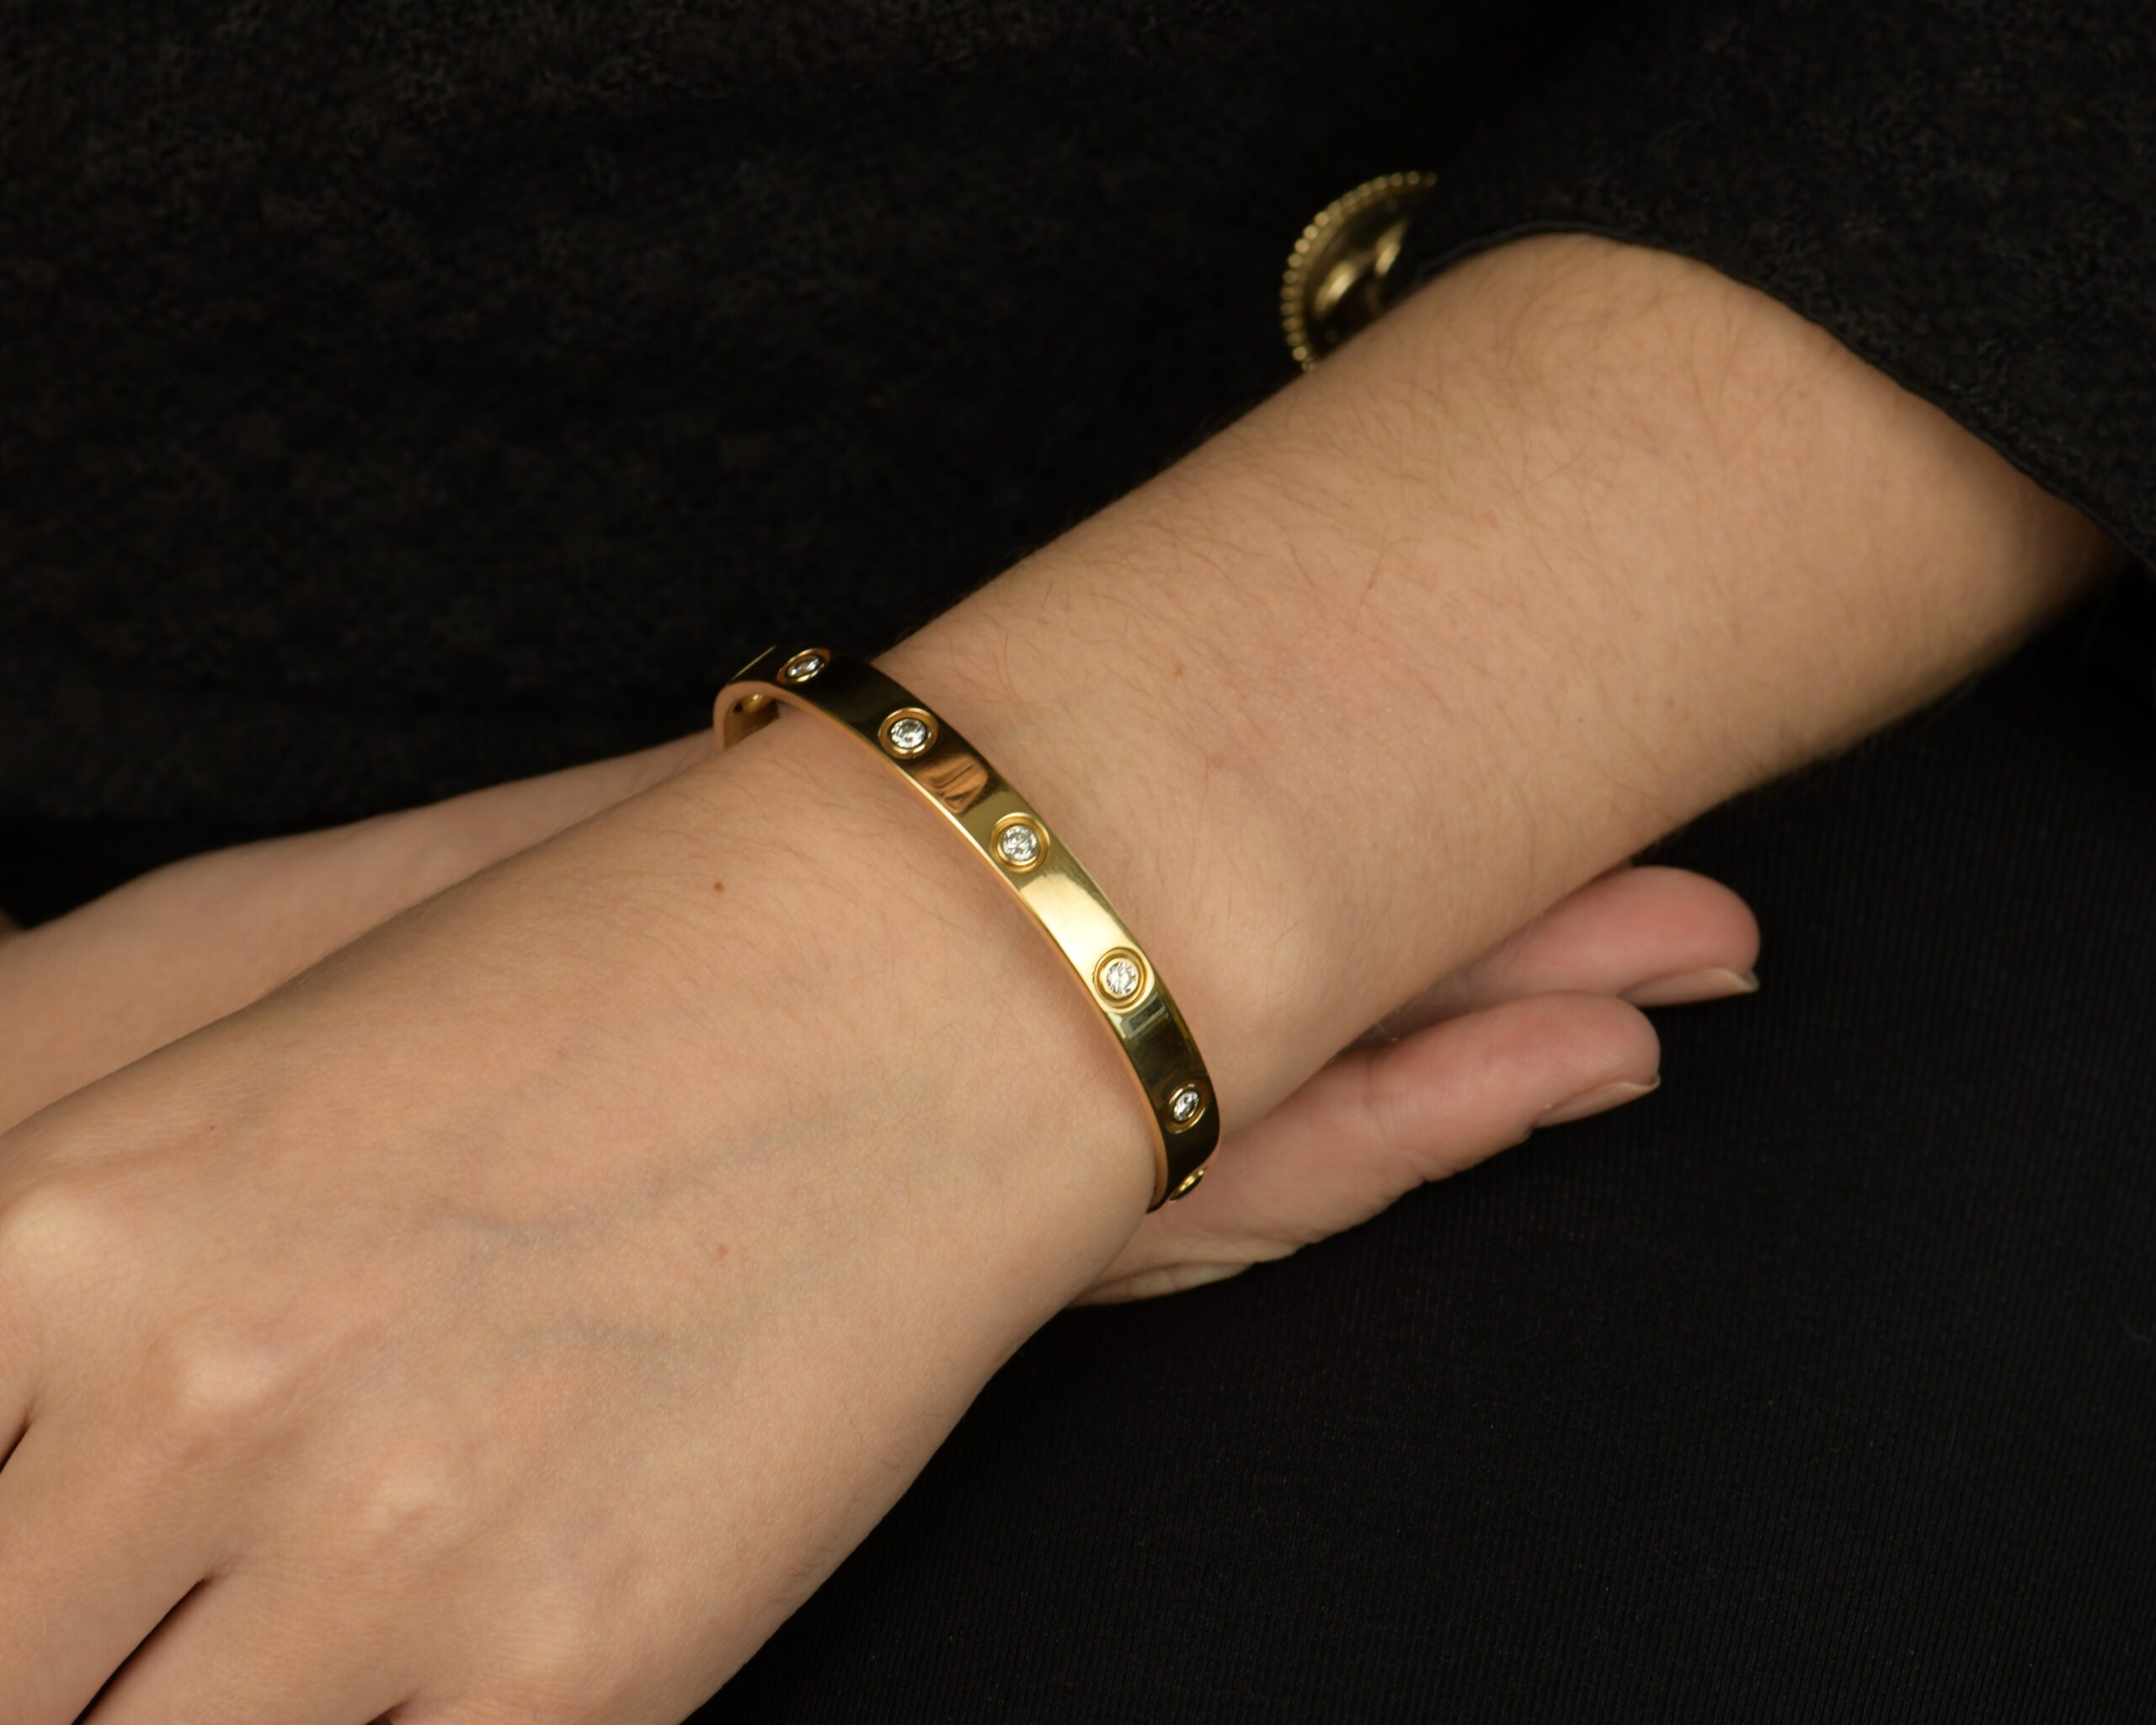 Authentic Cartier Baby Love Bracelet 18K 750 Rose Gold | eBay